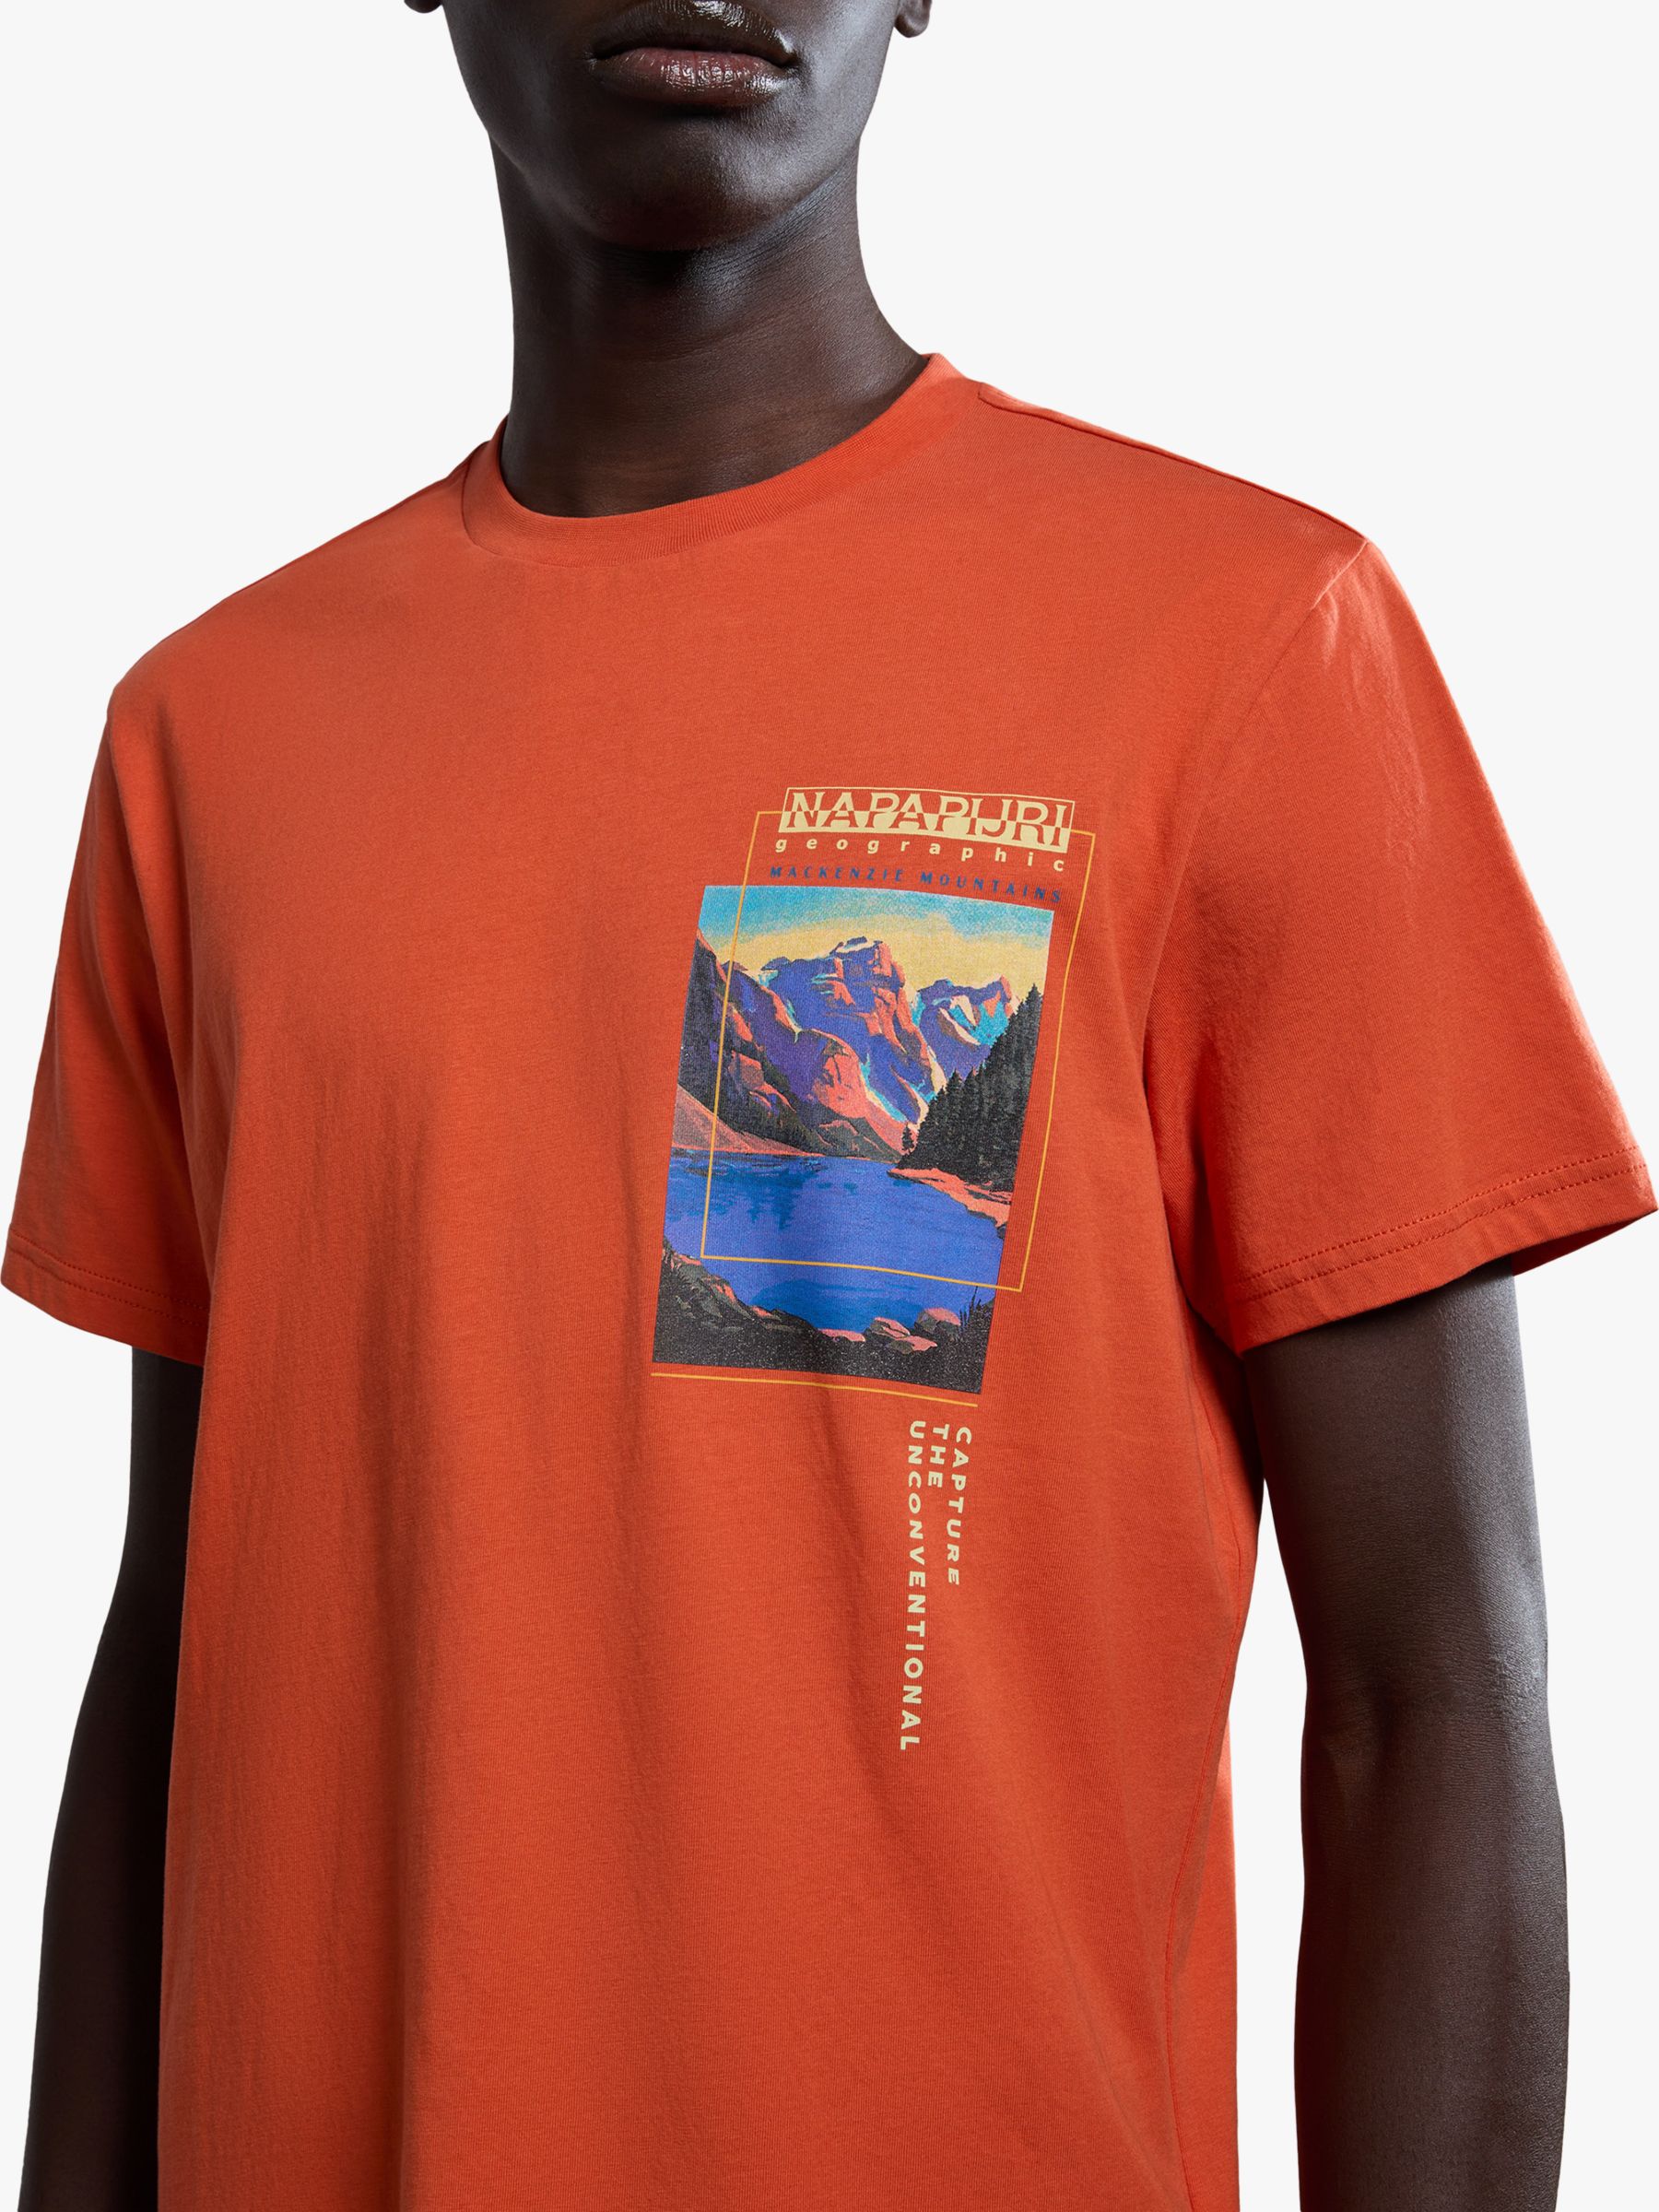 Buy Napapijri Canada Short Sleeve T-Shirt, Orange Online at johnlewis.com